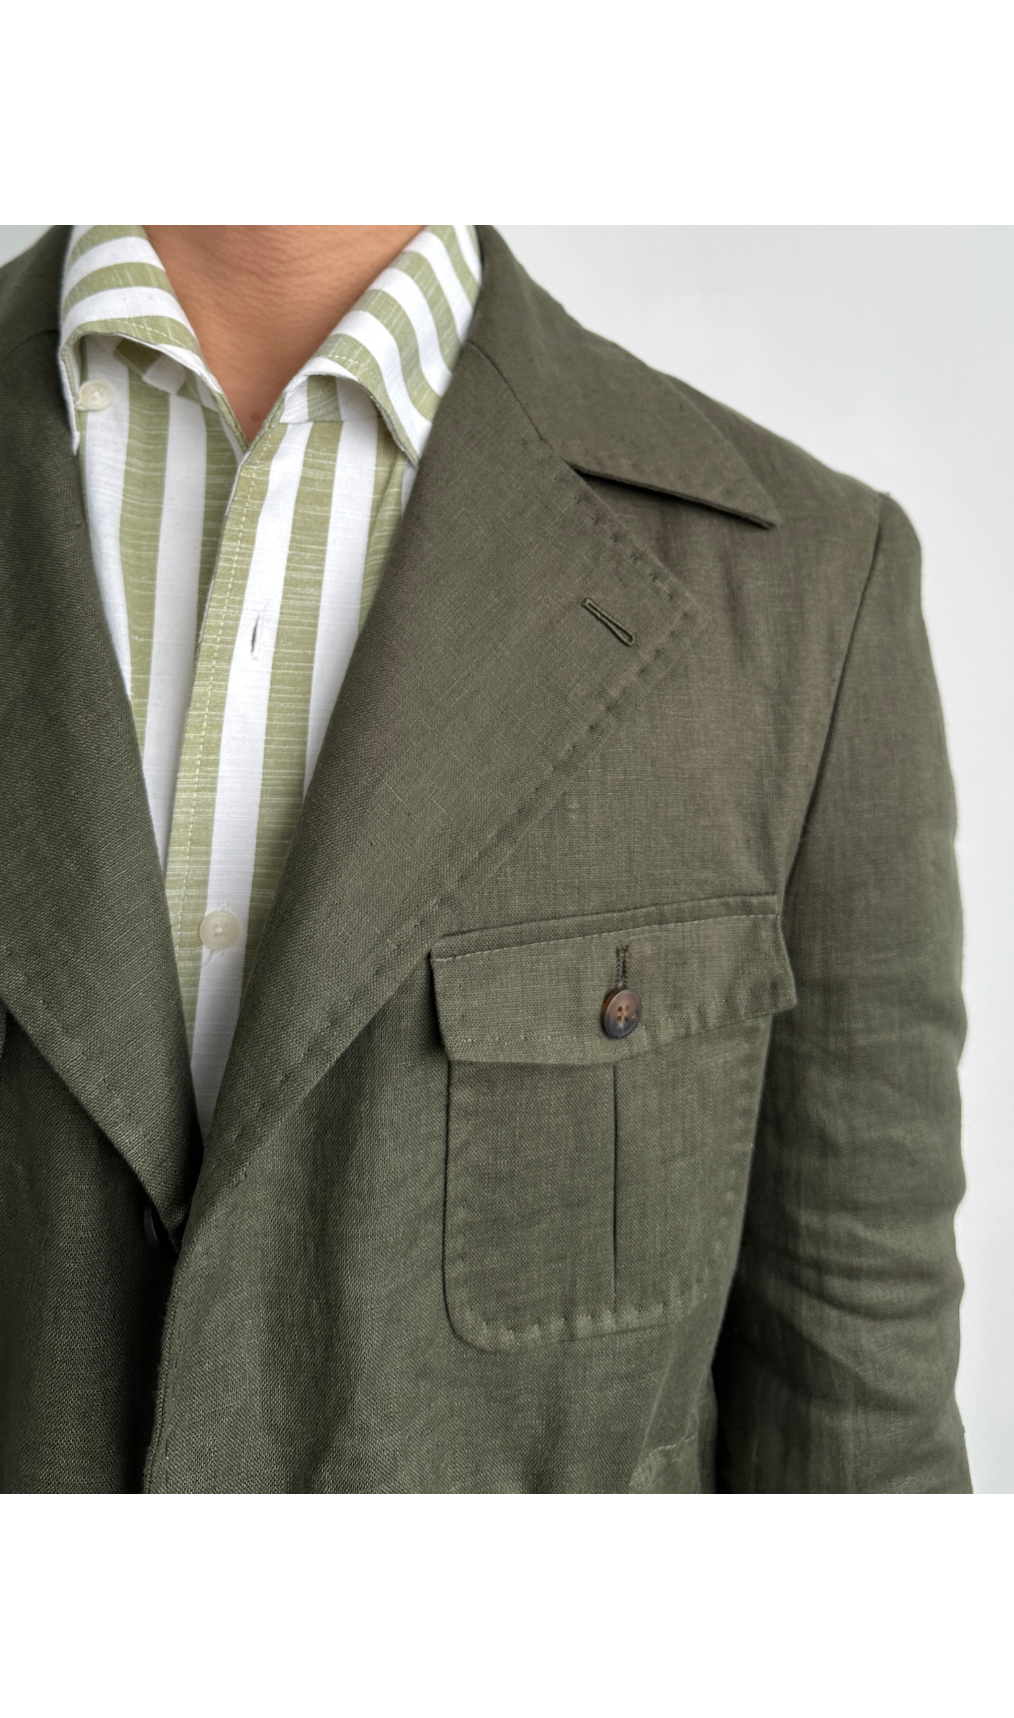 jacket detail image-S1L23